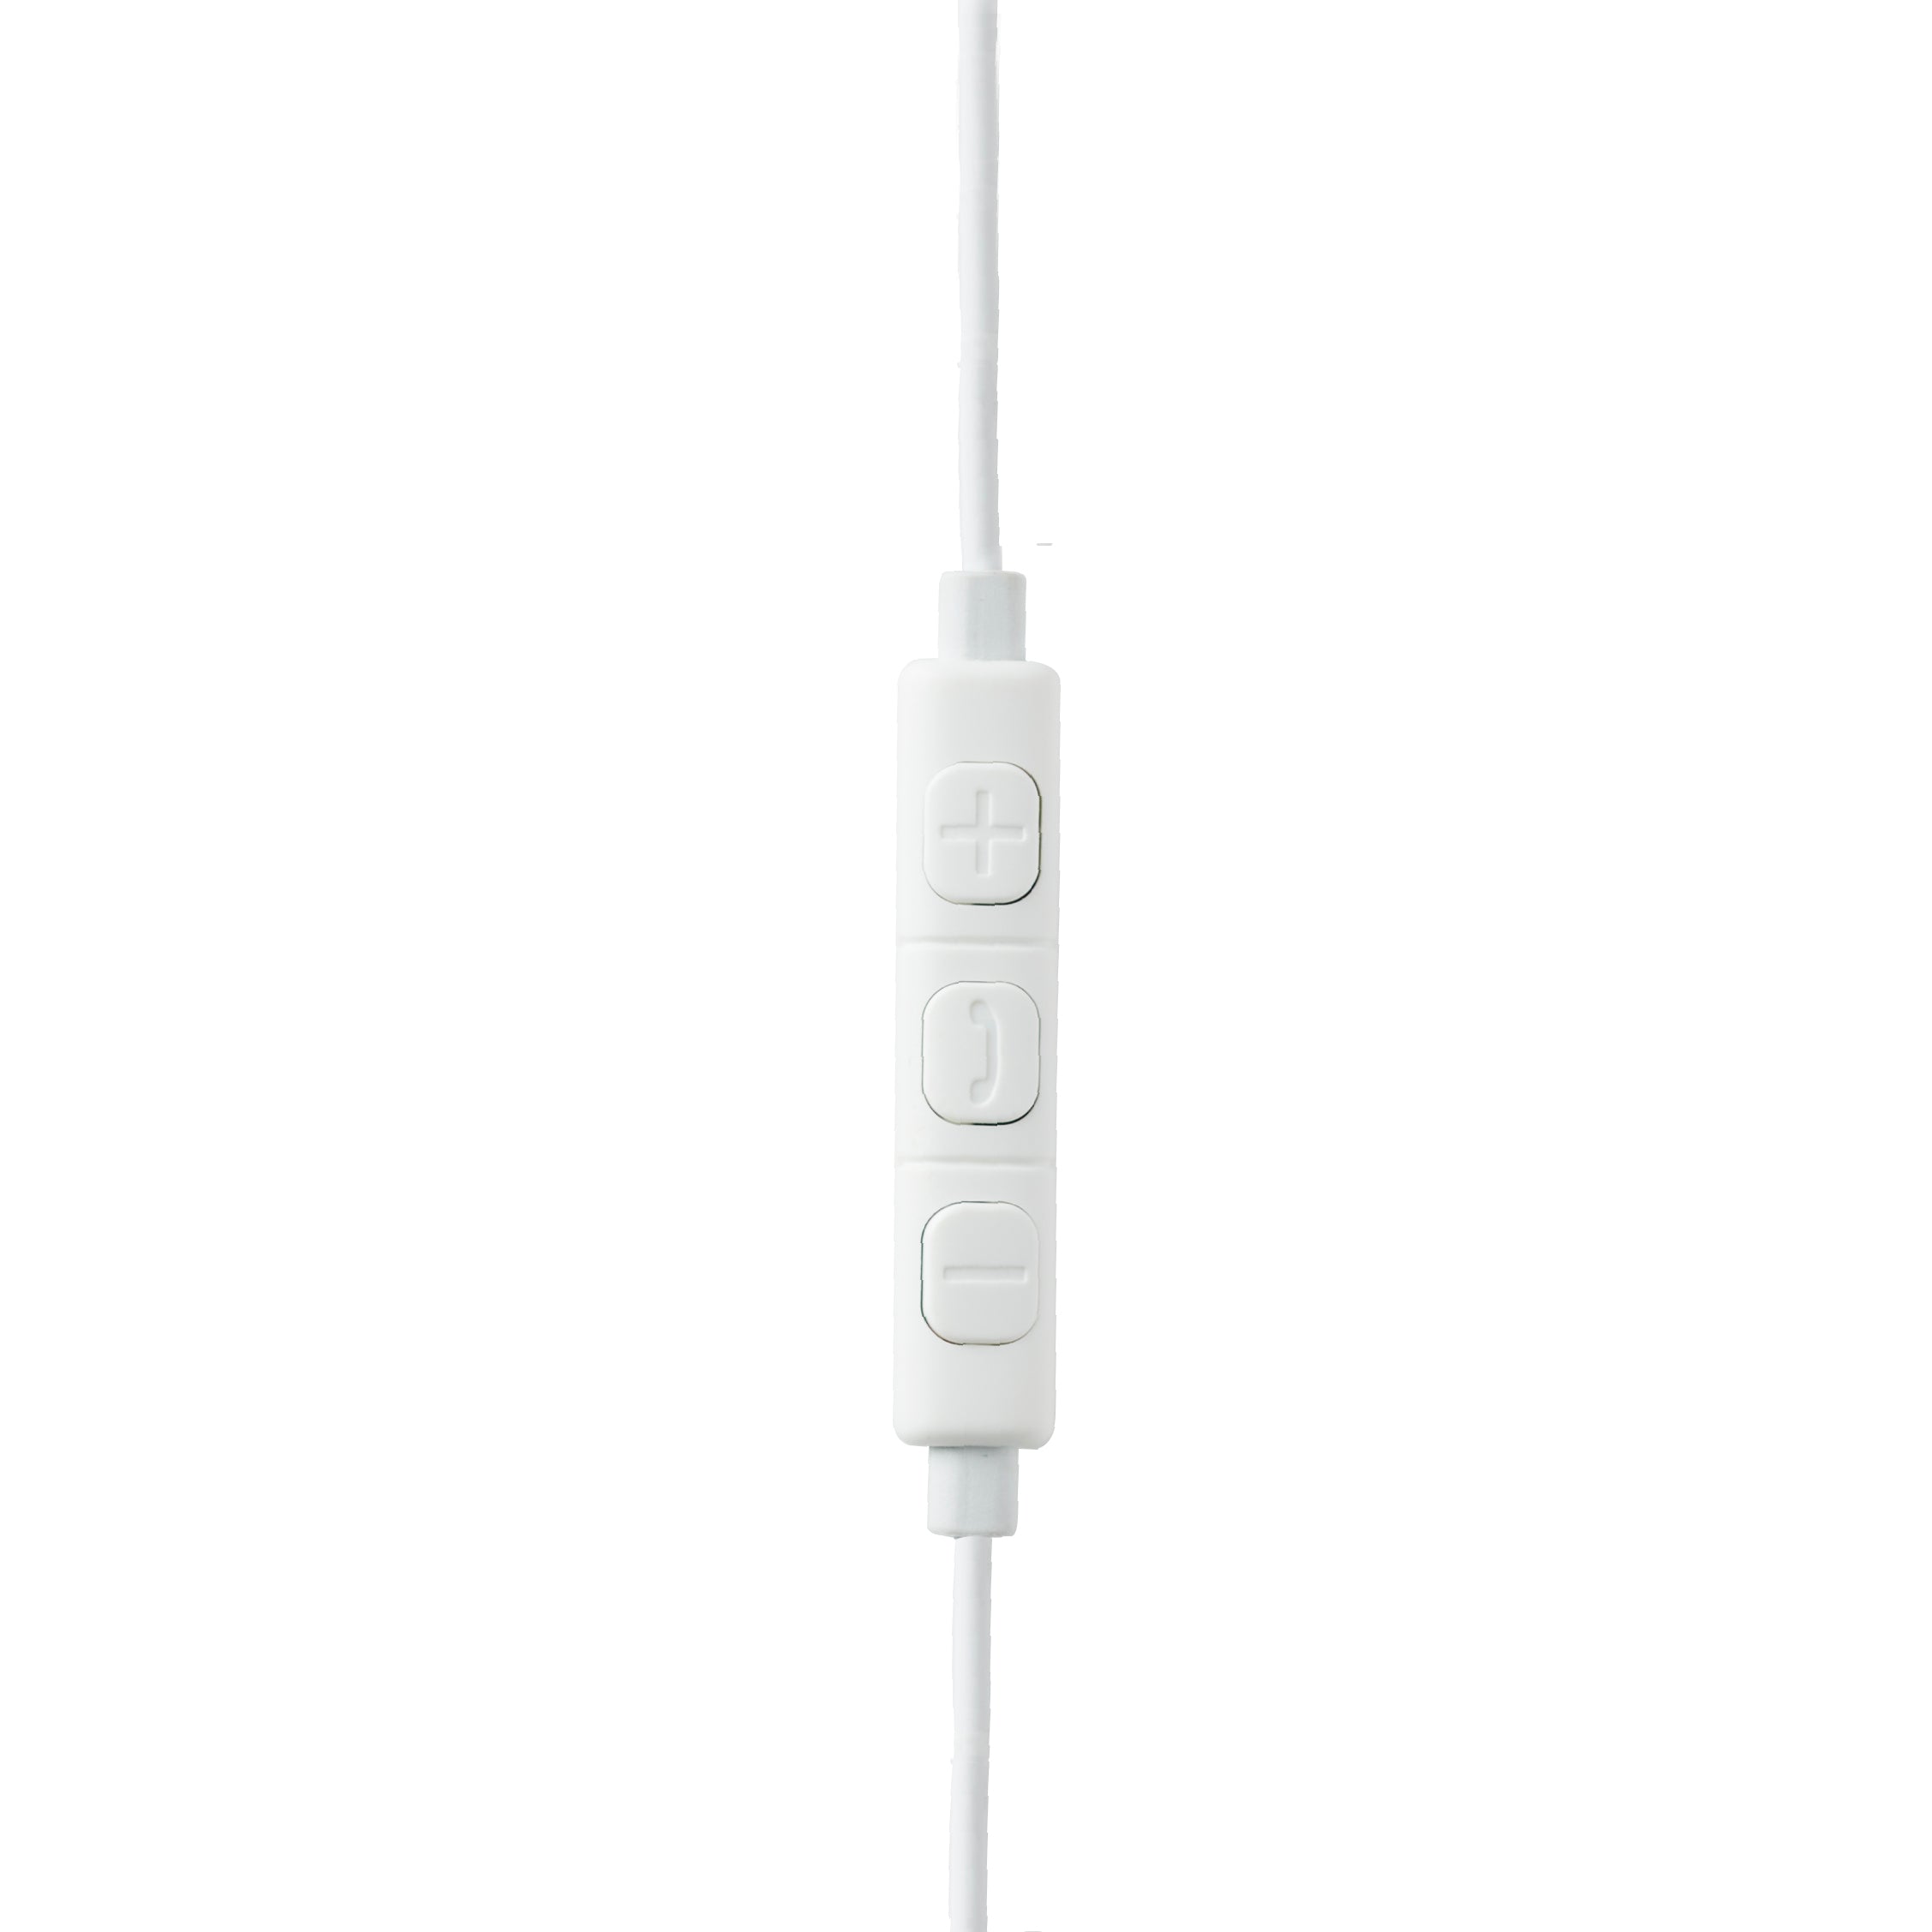 WMH-100 Wired Mono MFI Lightning Headset